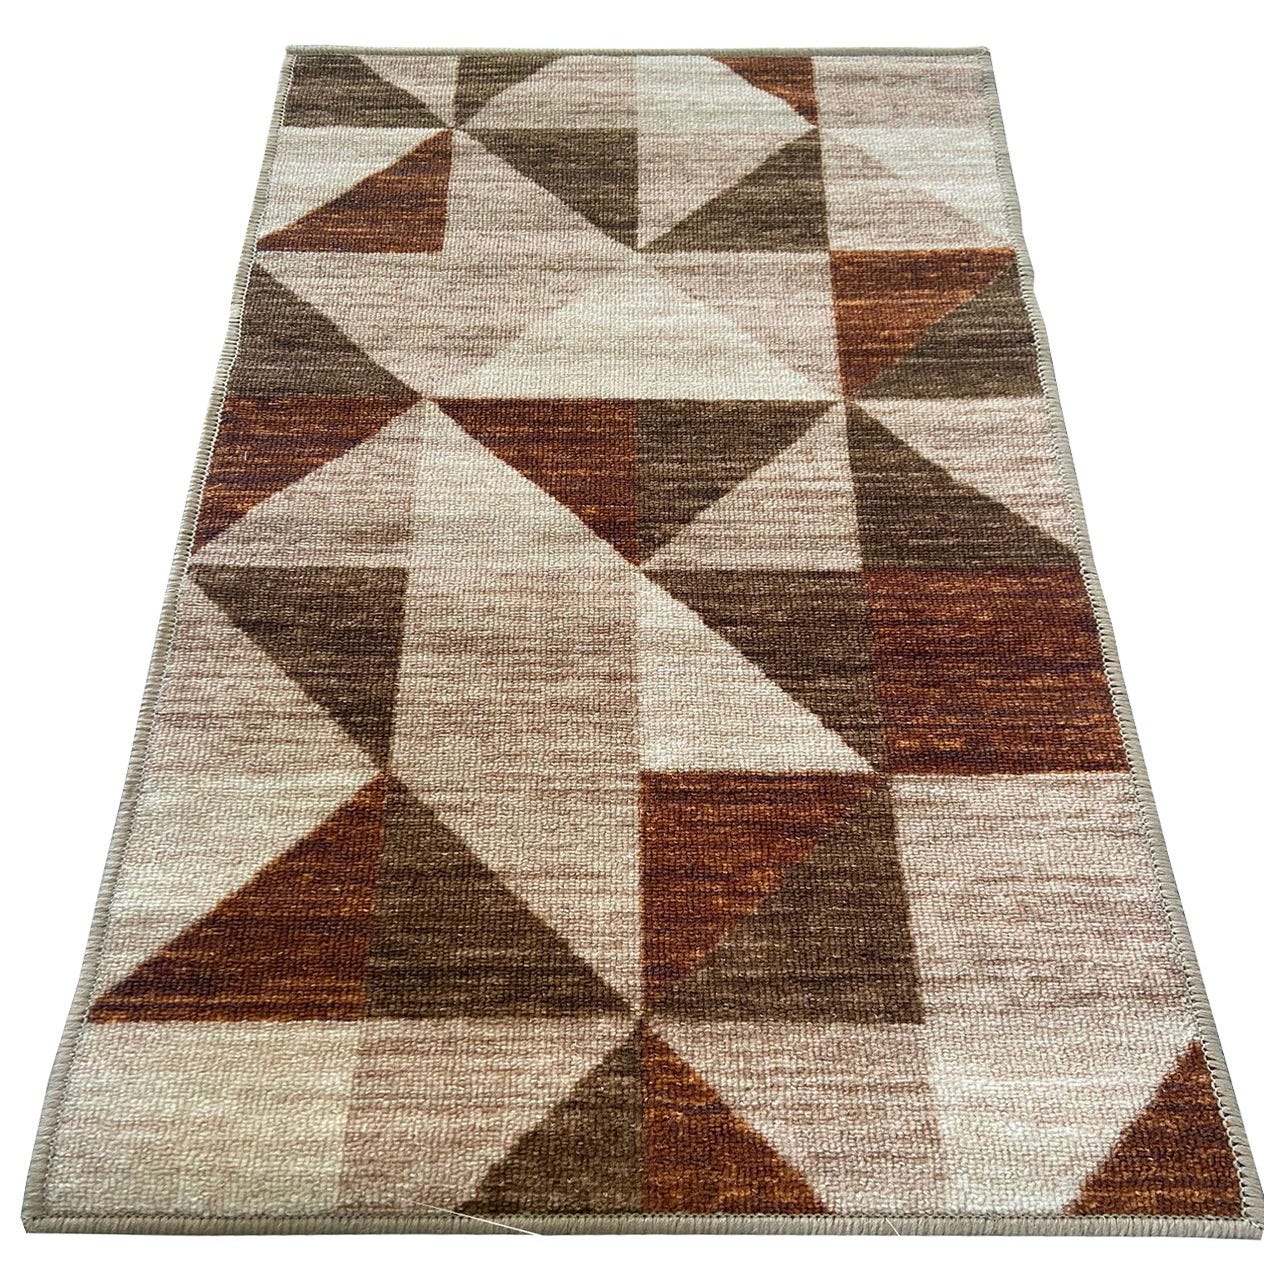 Cómo elegir la alfombra perfecta para el pasillo - Foto 1